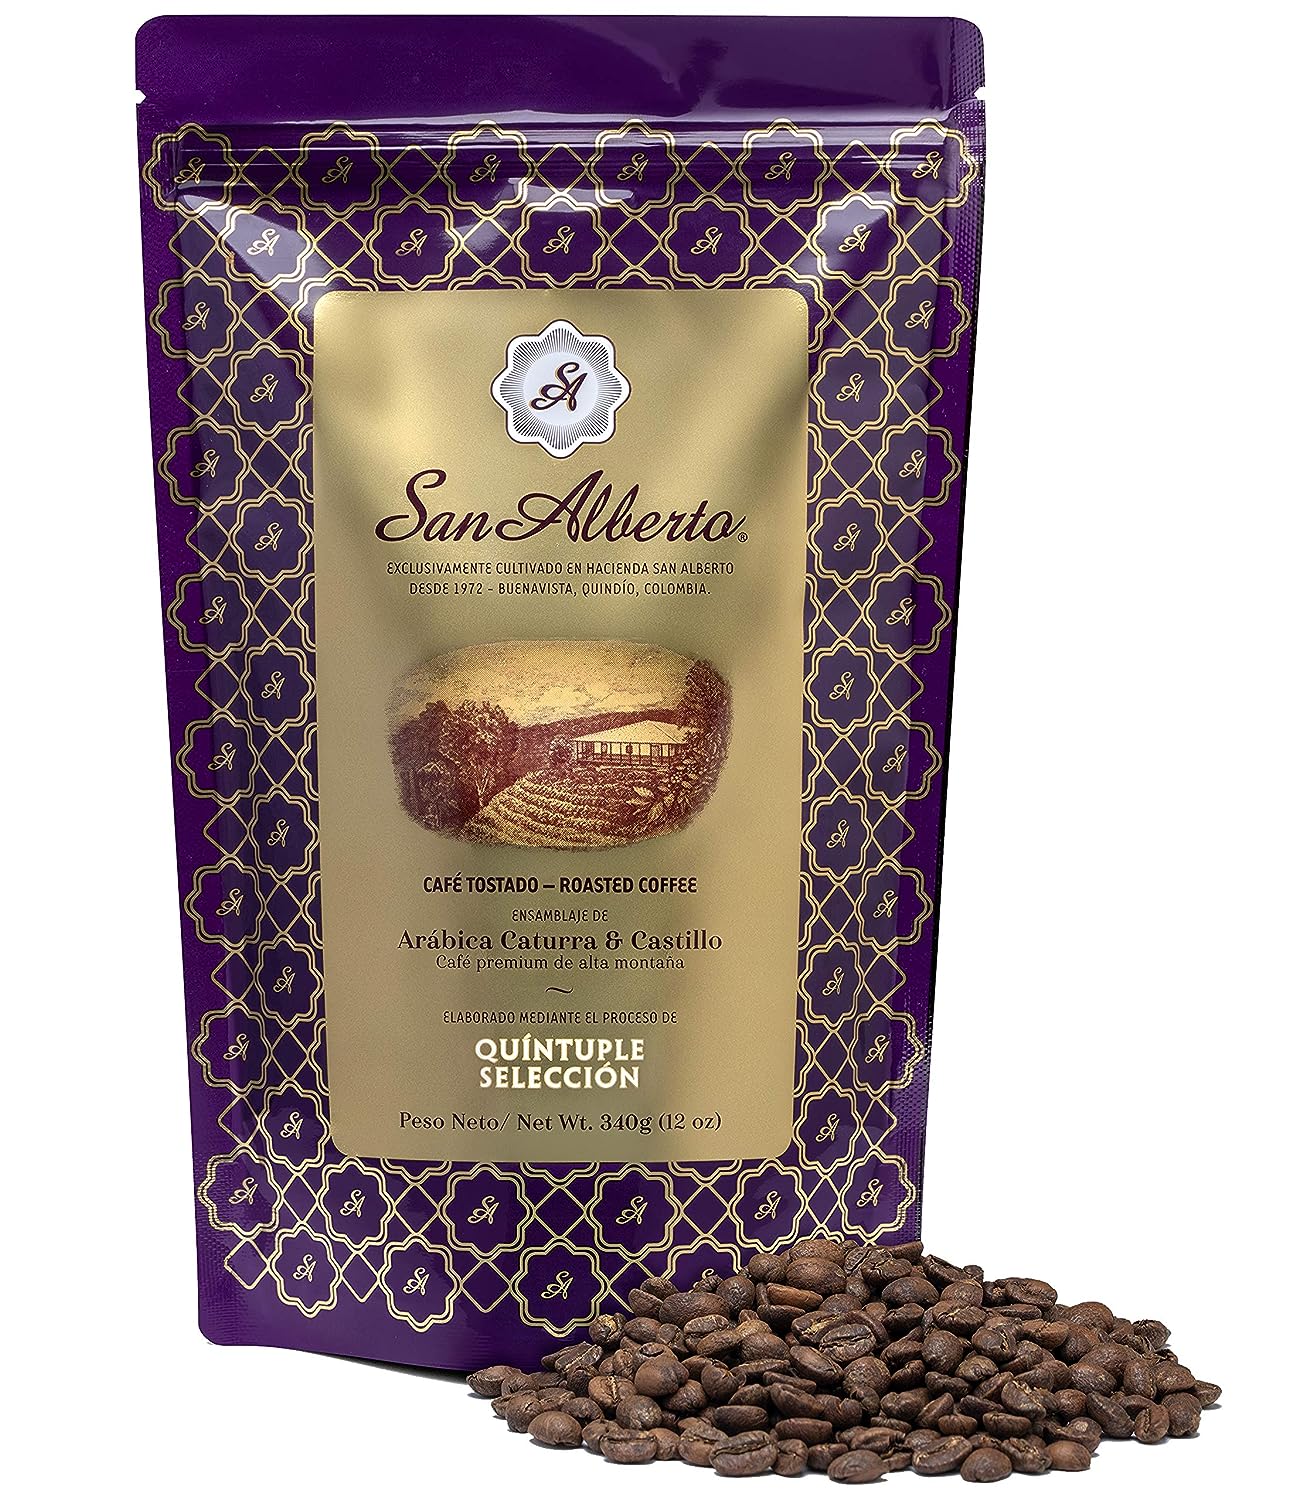 San Alberto Whole Bean Coffee Single Origin With Caramel and Soft Dark Chocolate Notes Arabica Specialty Colombian Black Coffee Medium Roast